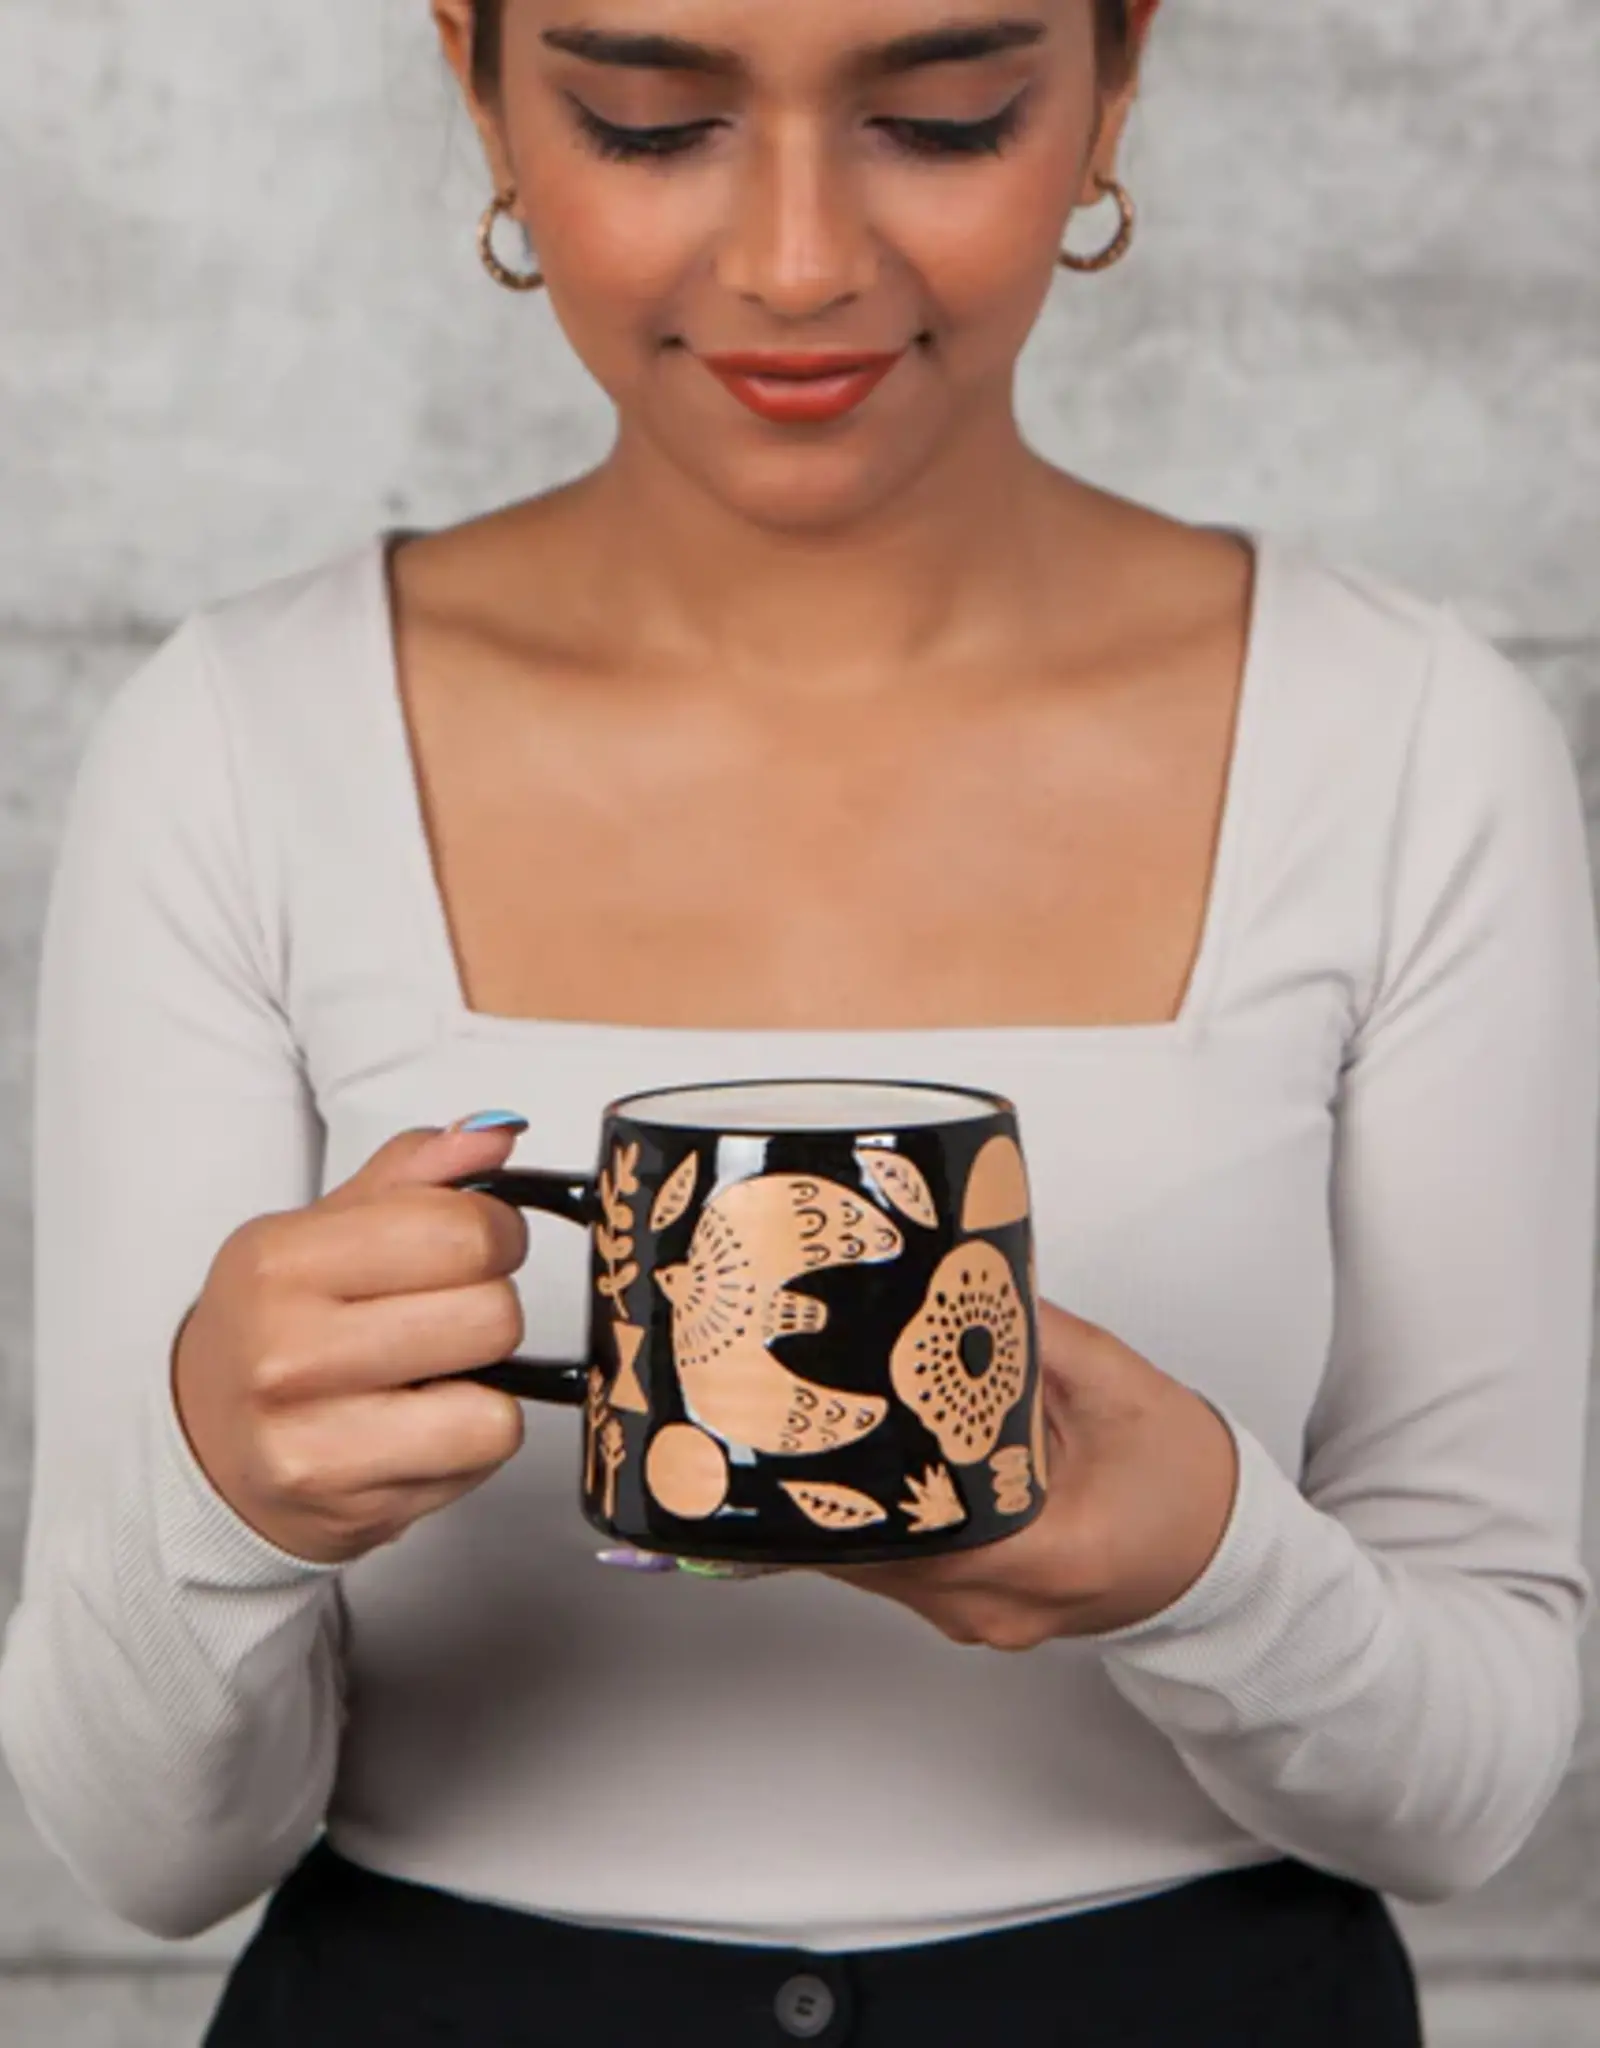 Danica + Now Designs Mug - Imprint Myth